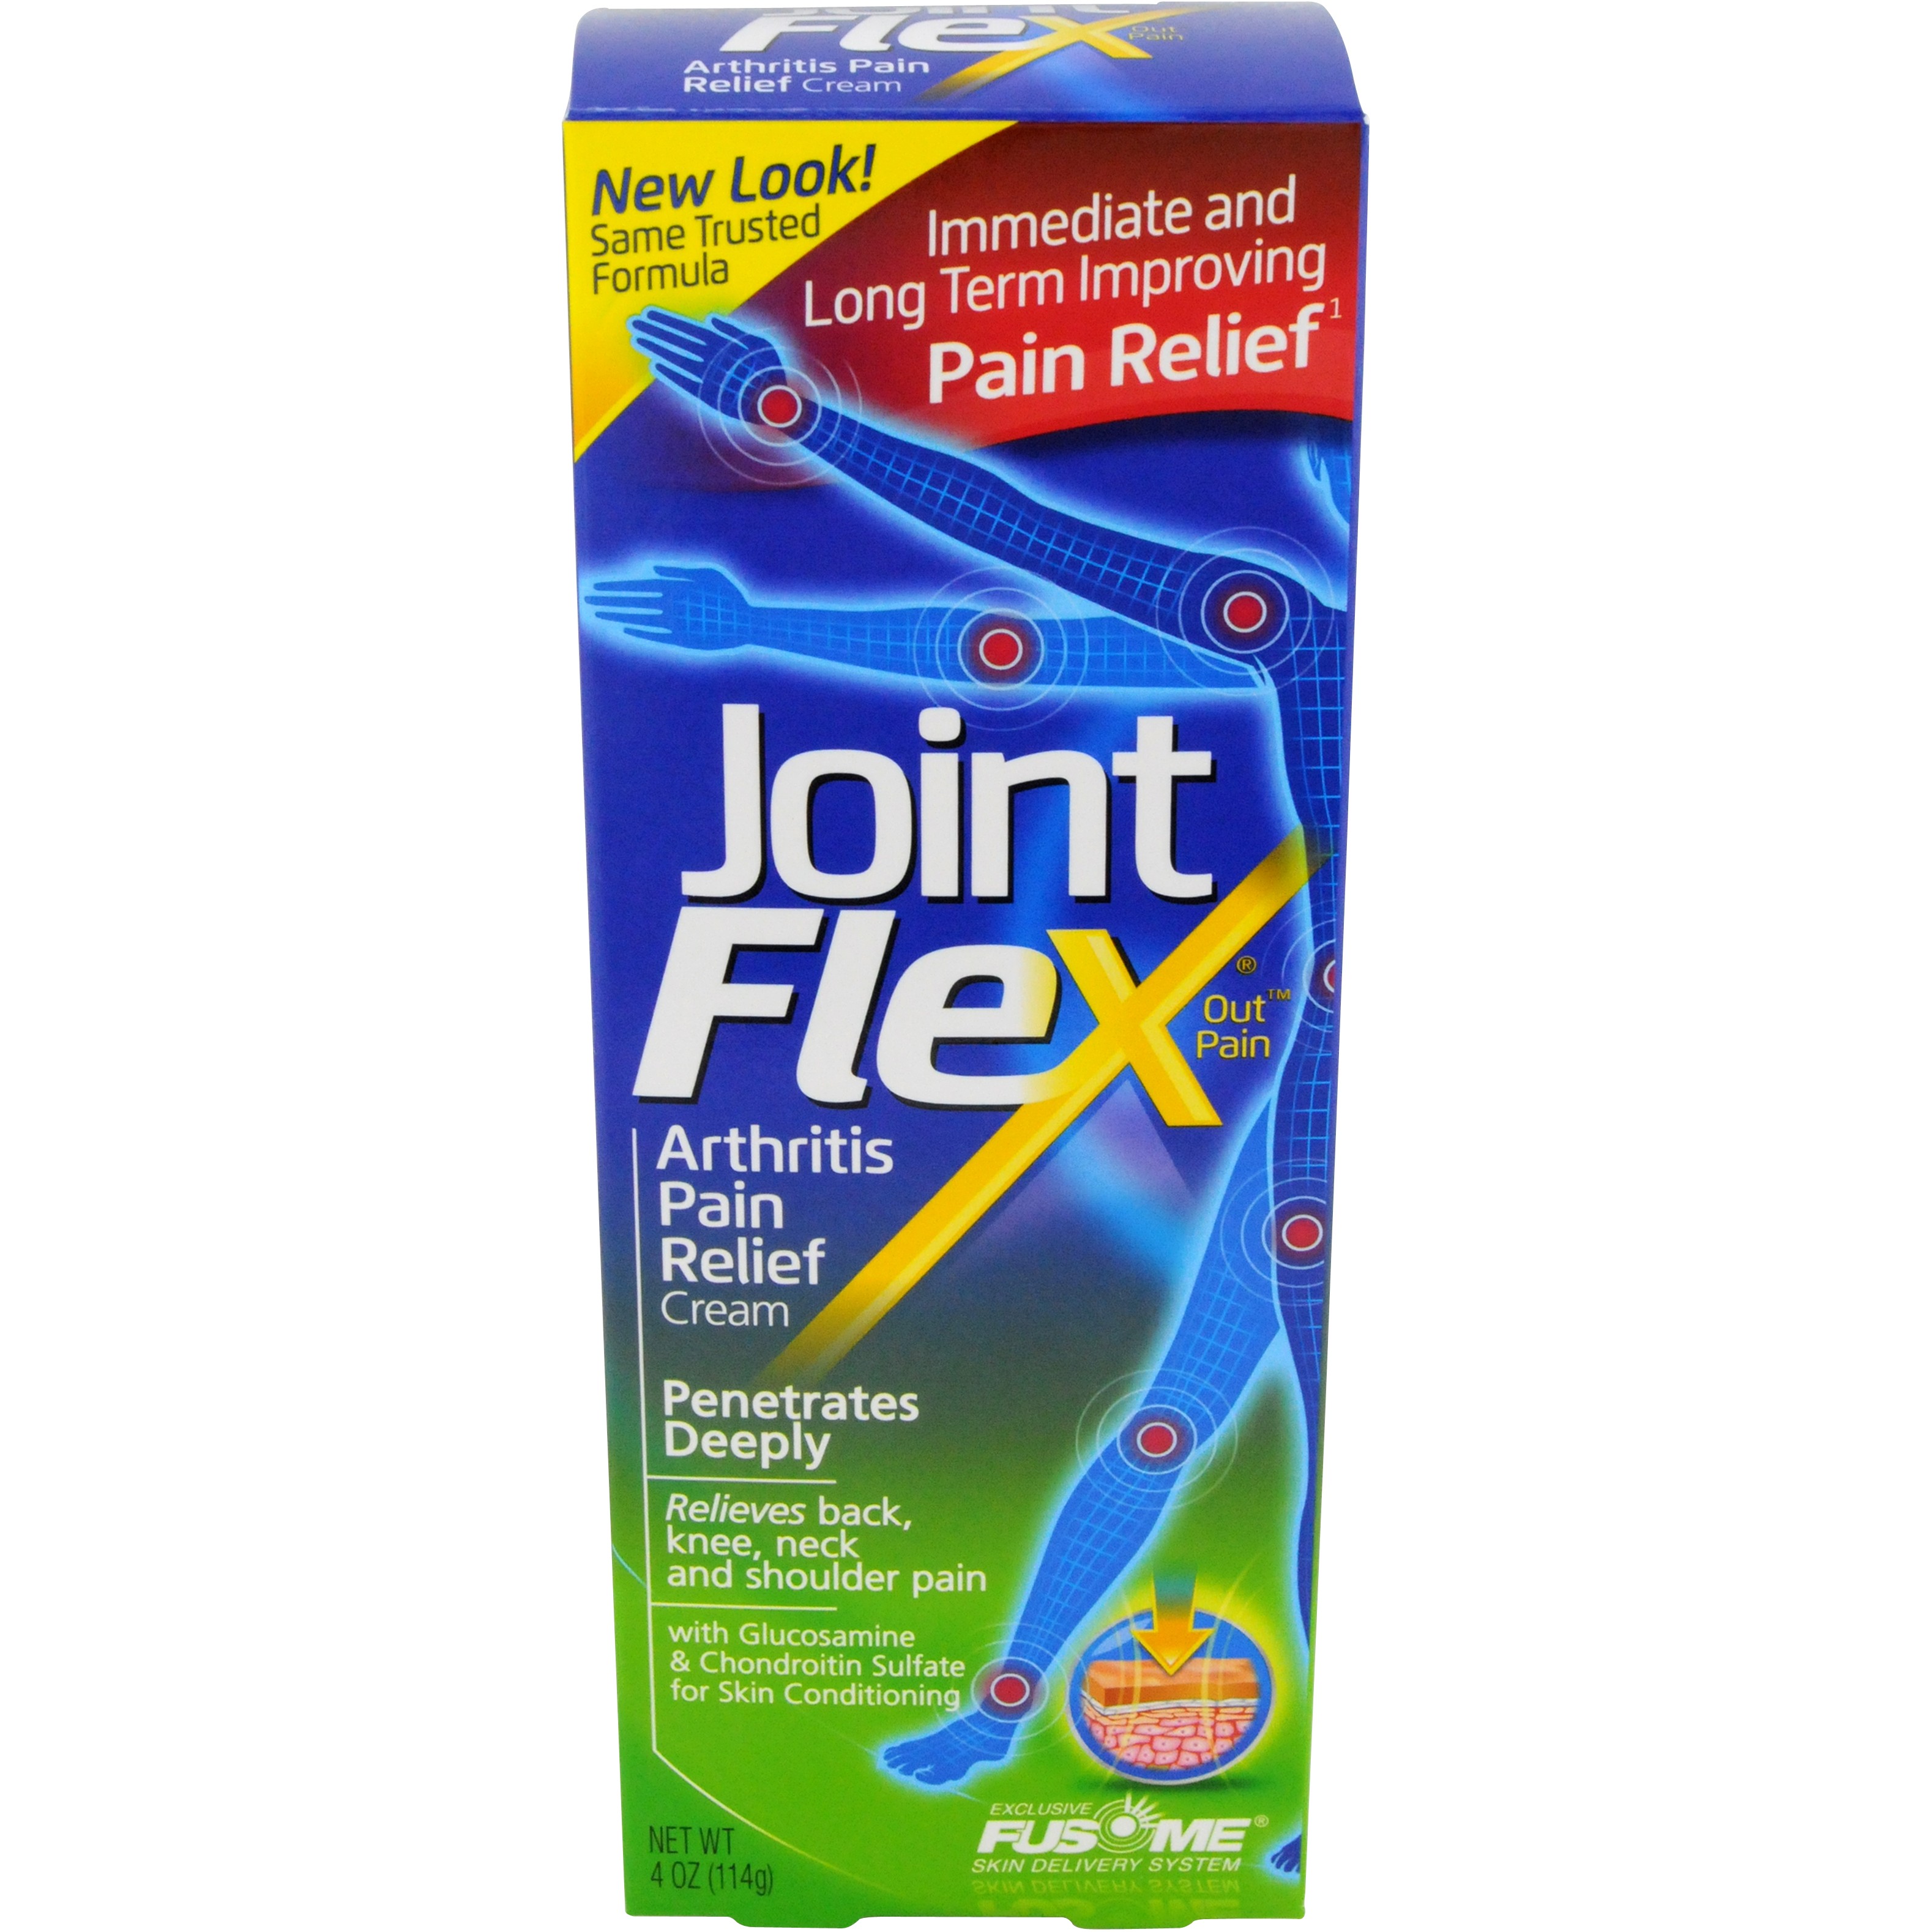 RITE AID: Free + Money Maker Joint Flex Pain Relief Cream!